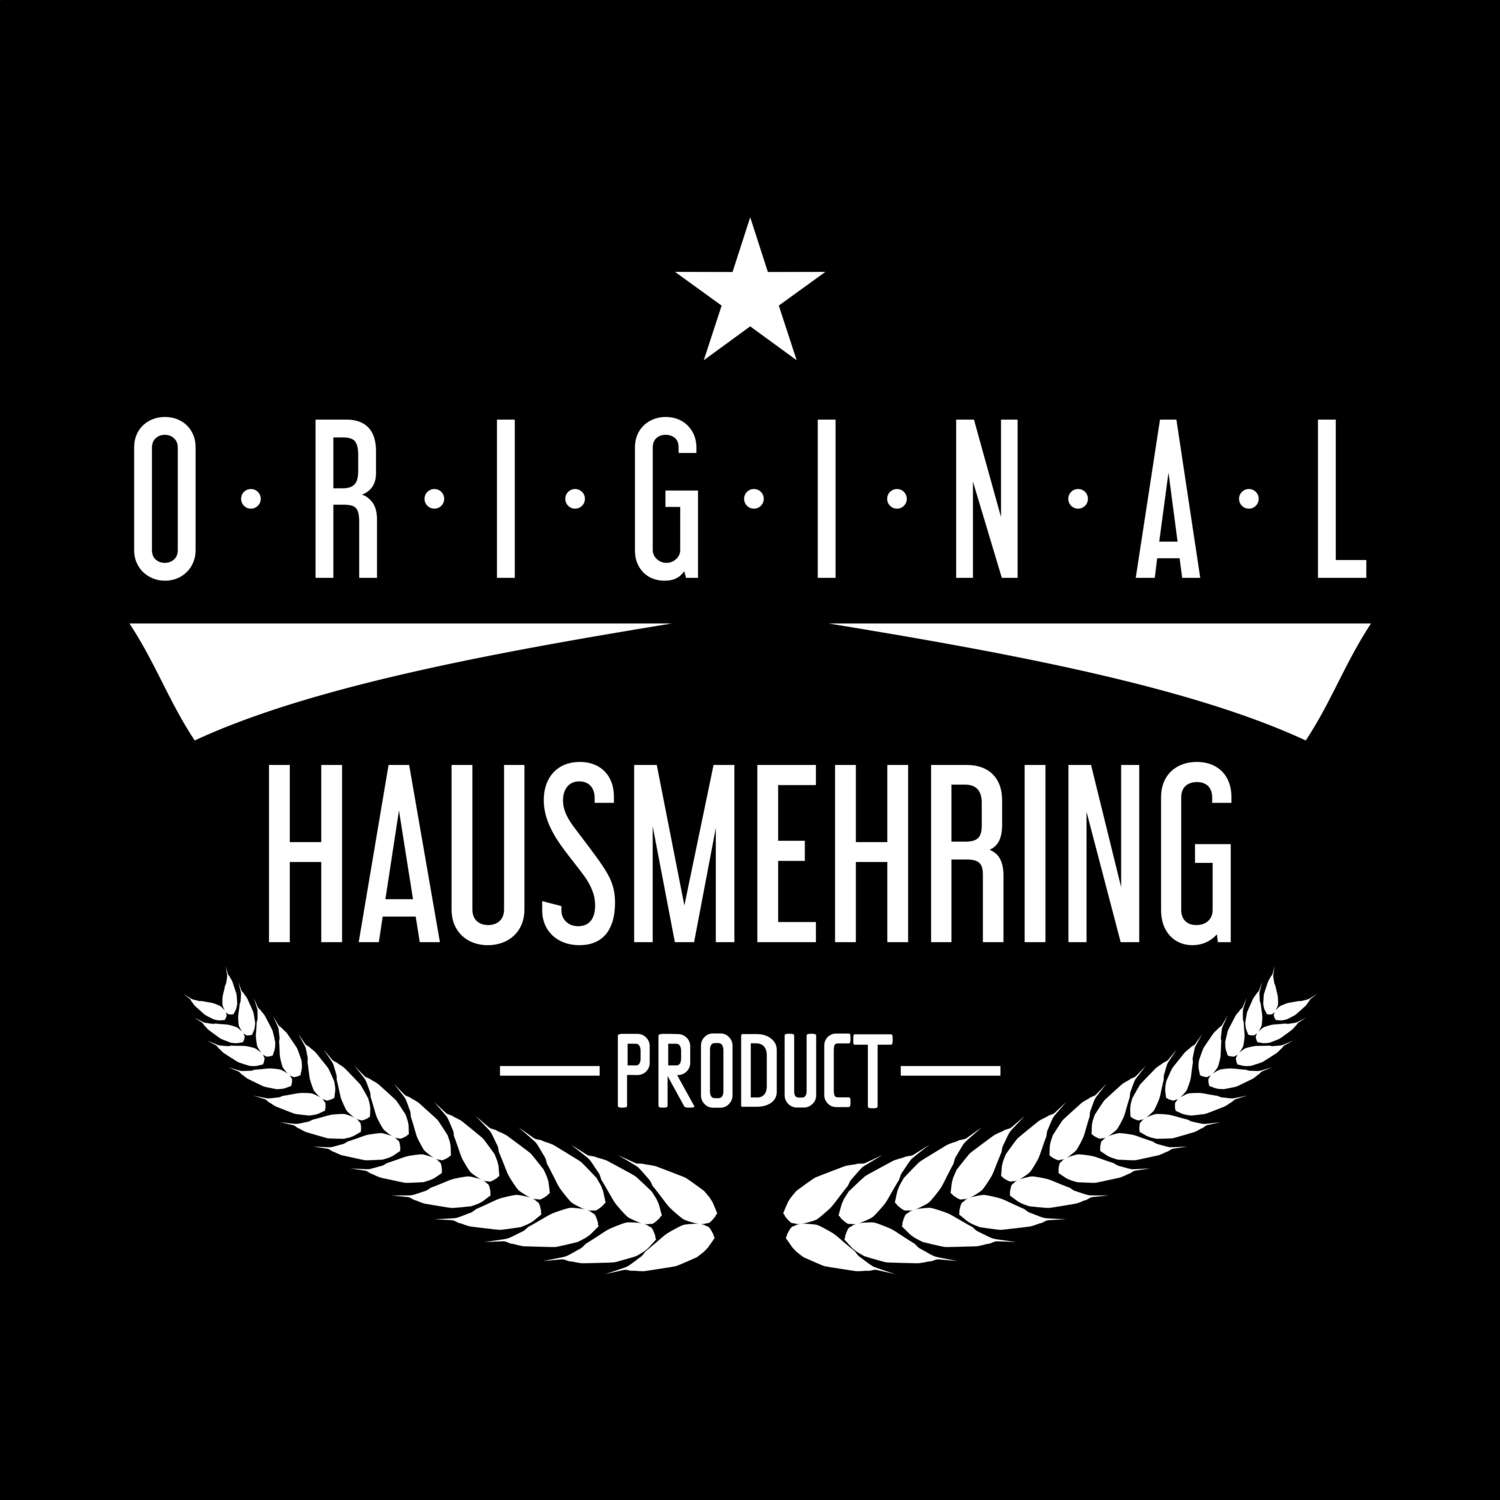 Hausmehring T-Shirt »Original Product«